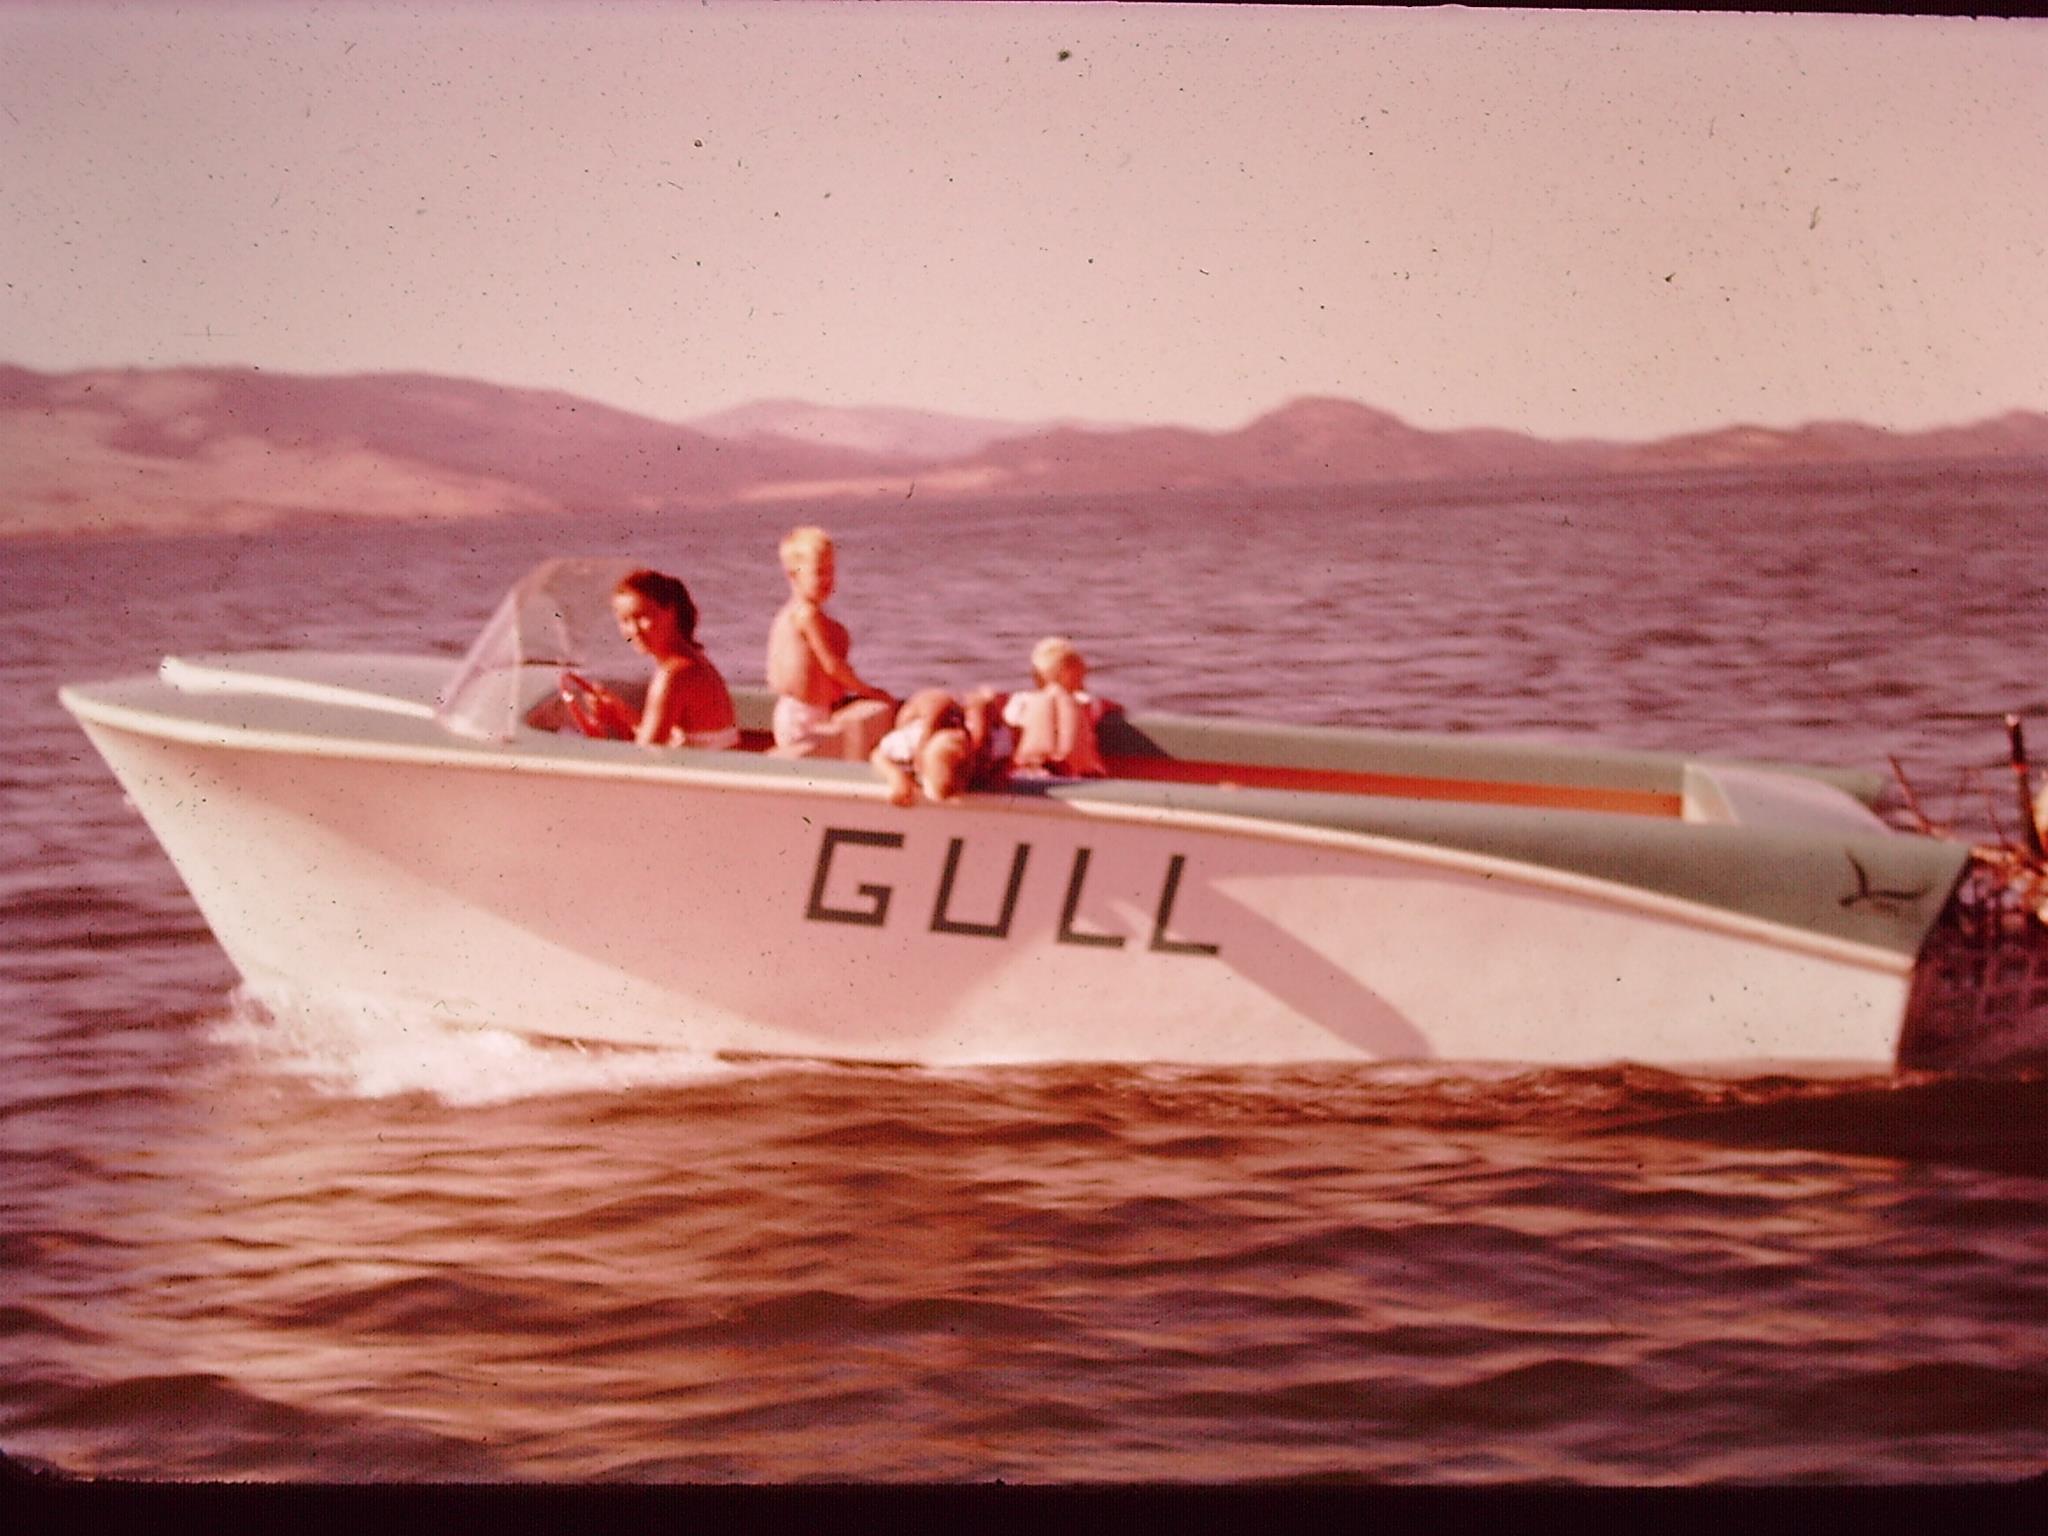 Gull Boats & RV Photo